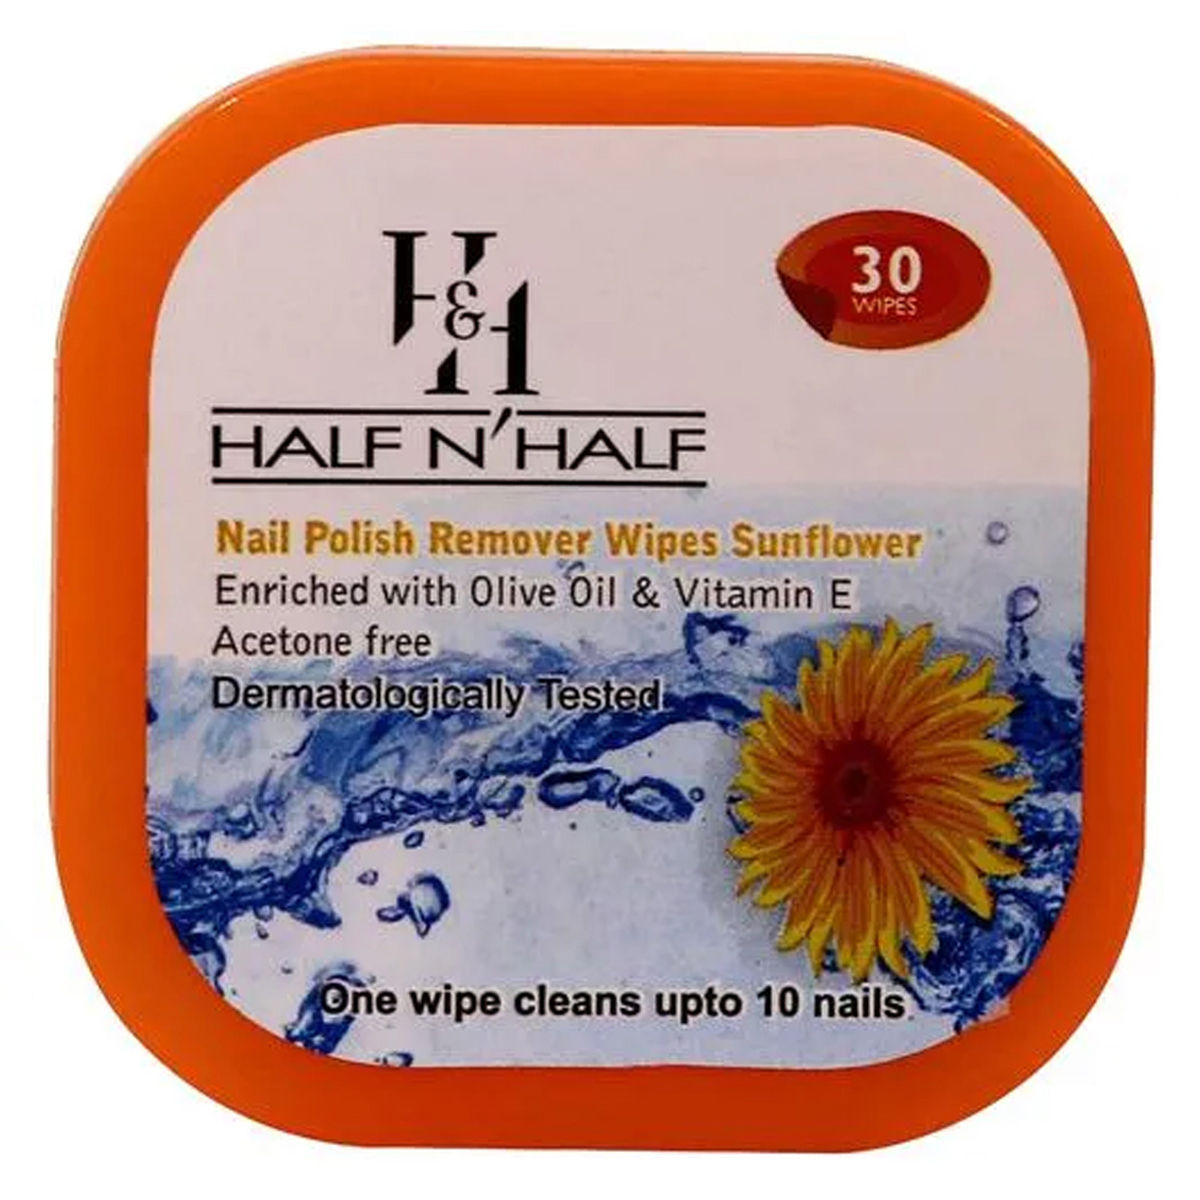 Buy Half & Half Nail Polish Remover Wipes, 30 Count Online